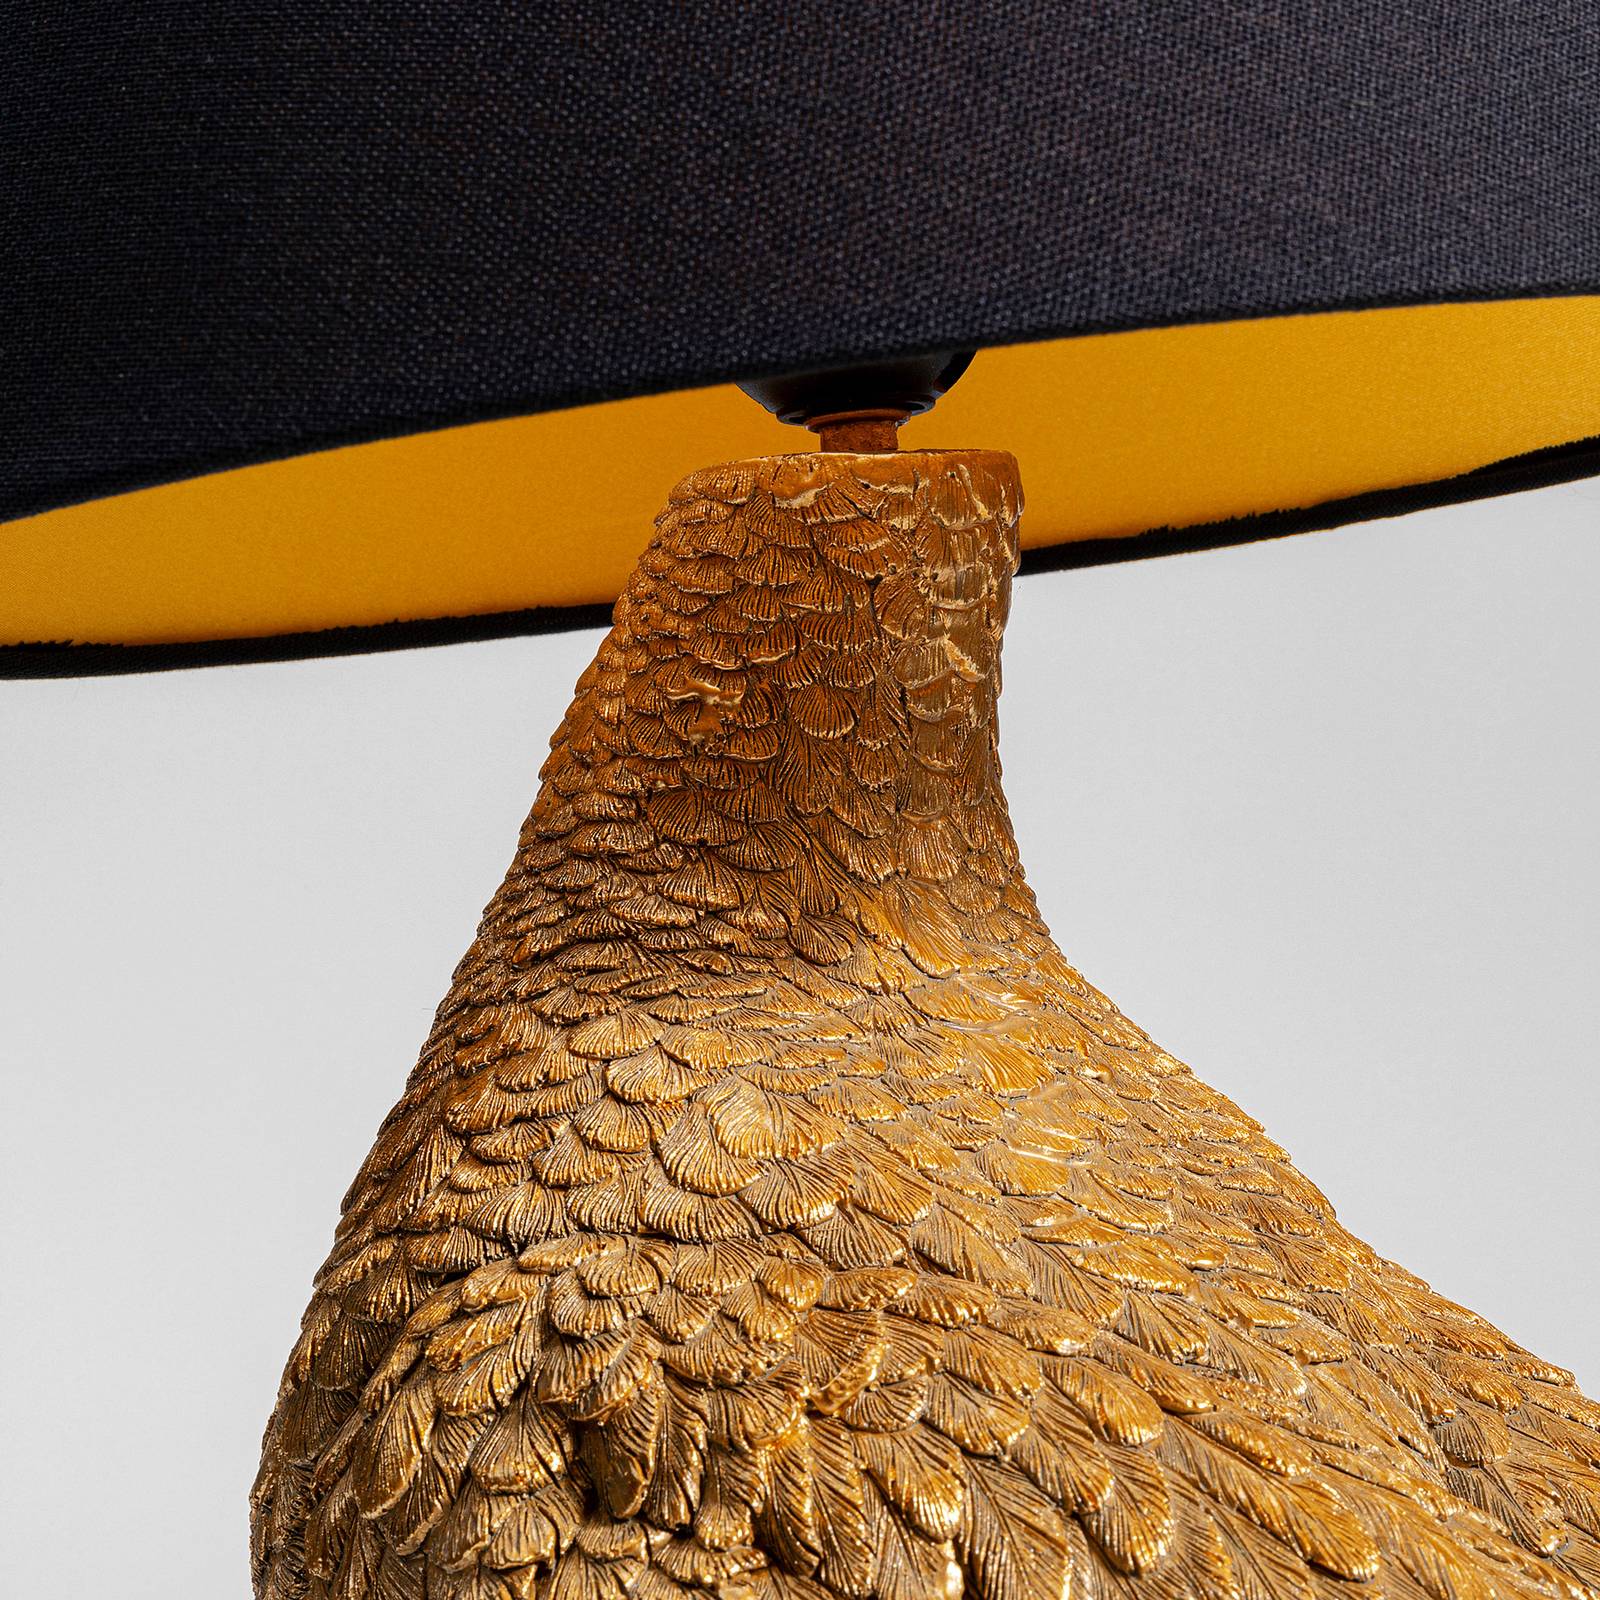 KARE Animal Duck lampe à poser, abat-jour tissu